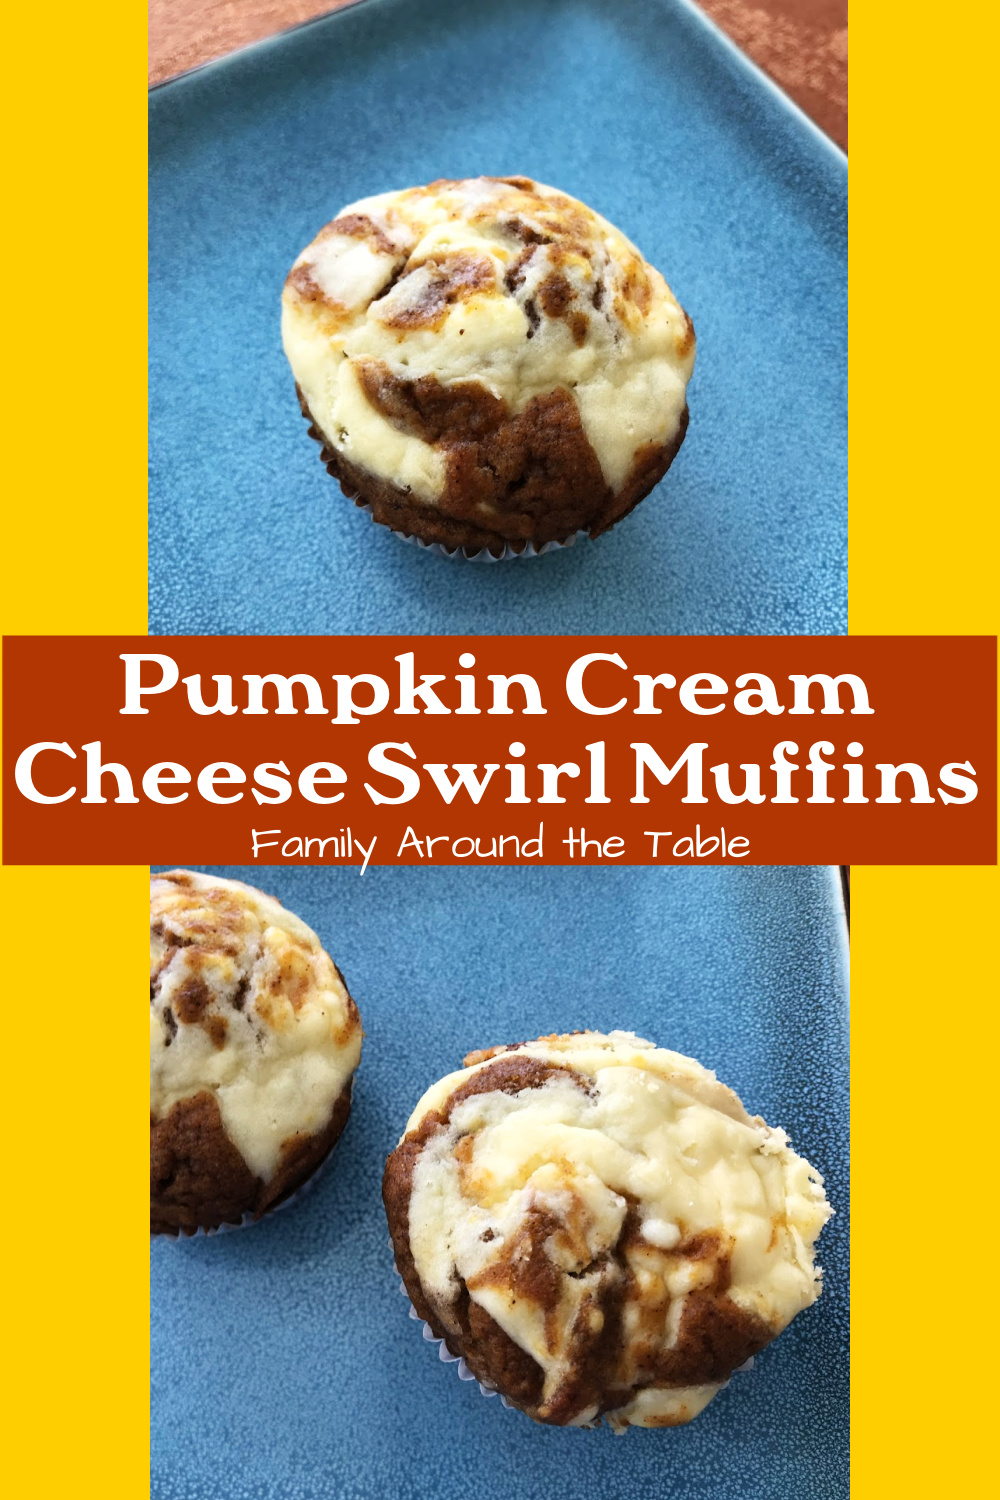 Pumpkin cream cheese muffin Pinterest image.